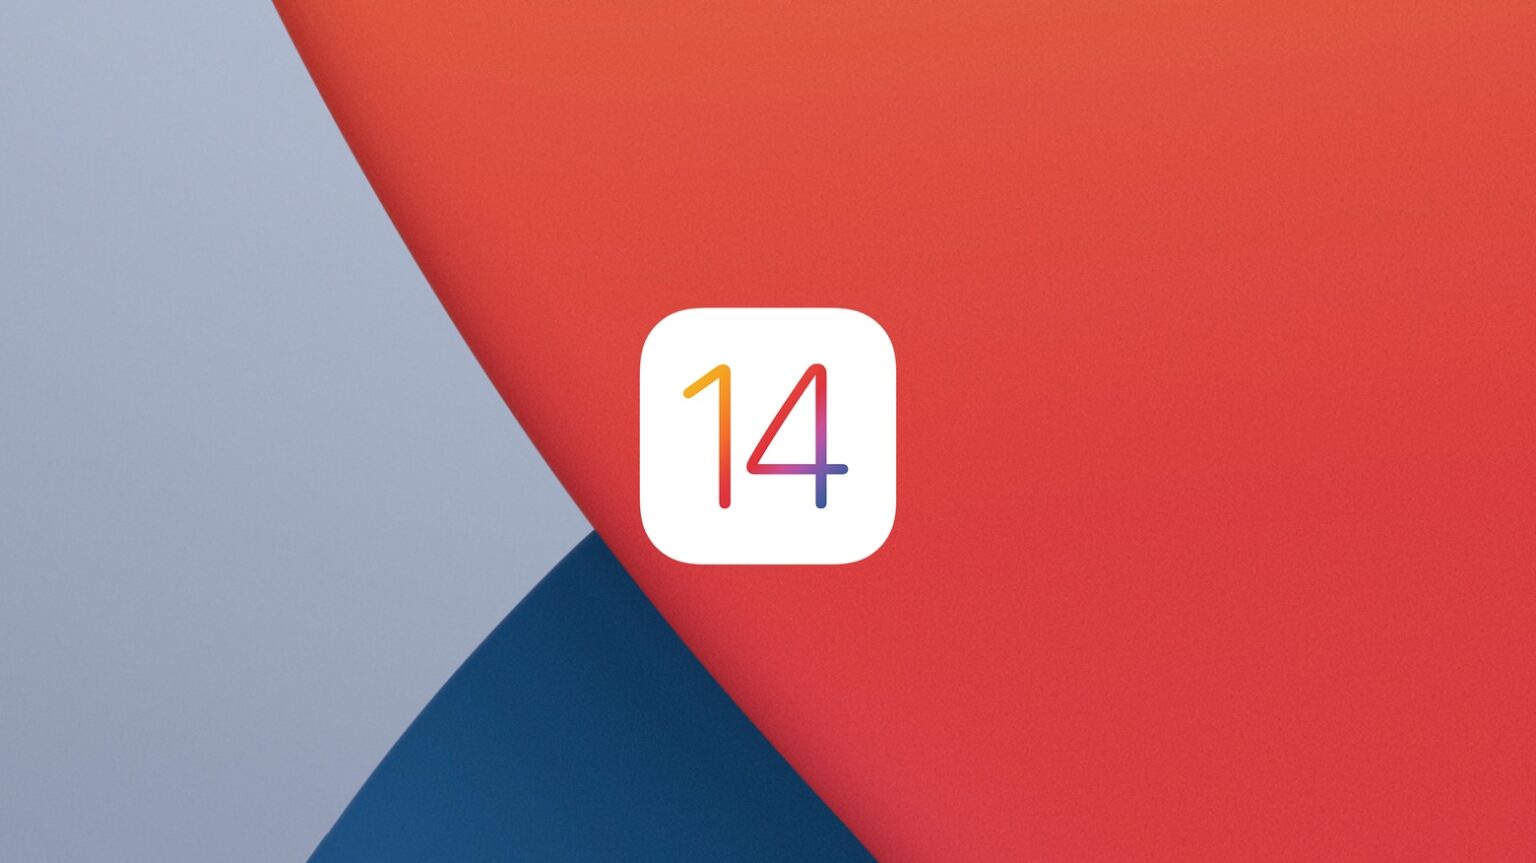 iOS 14 adoption. It’s a good thing.